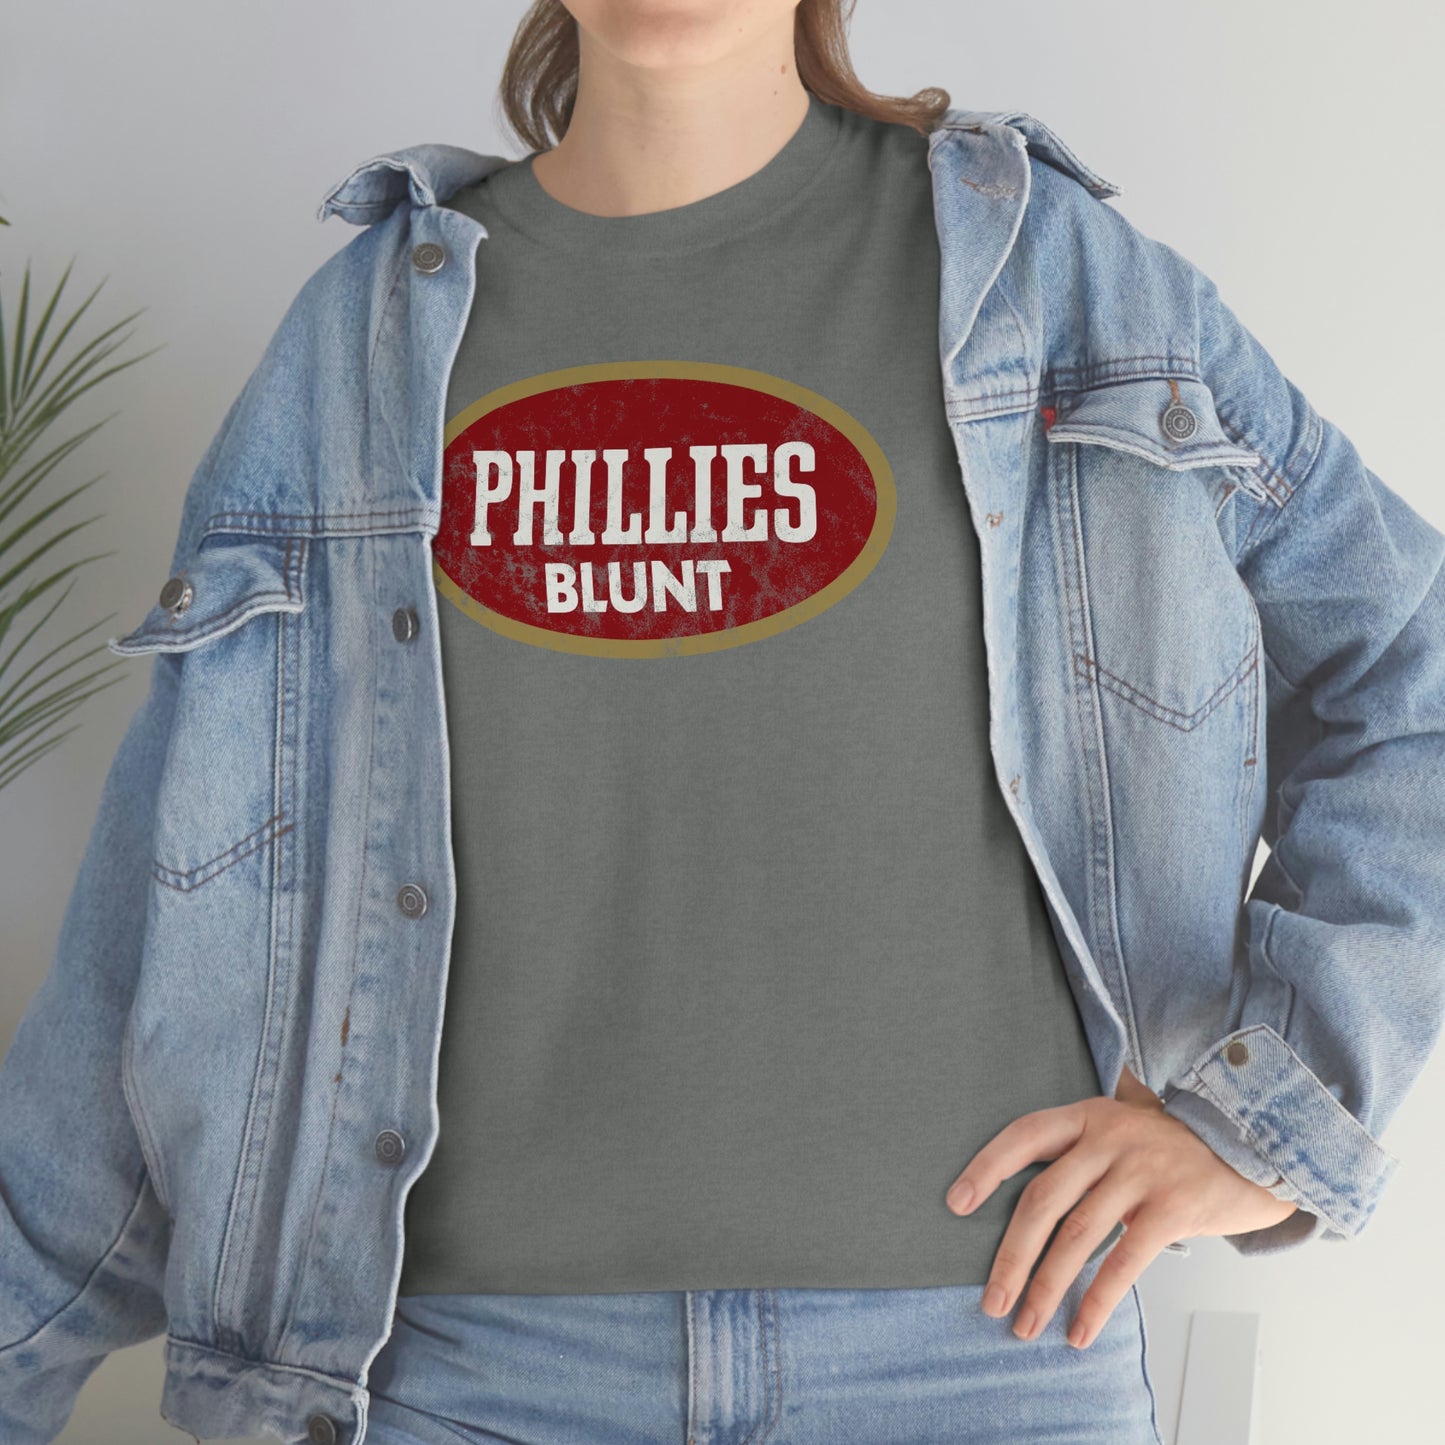 Phillies Blunt T-Shirt